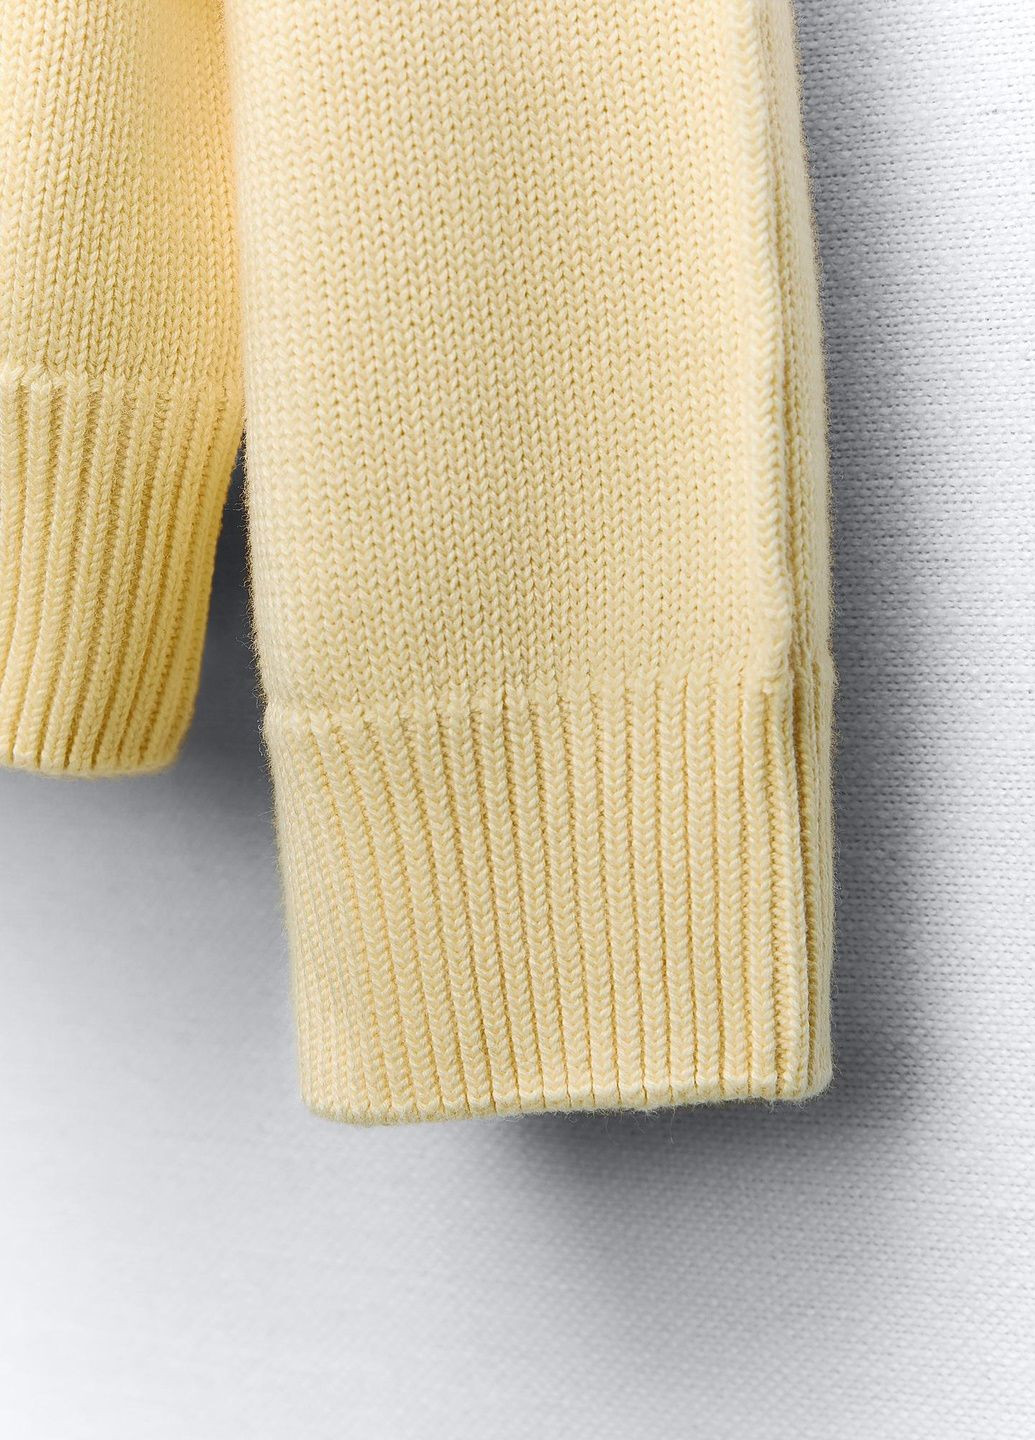 Светло-желтый демисезонный свитер Zara